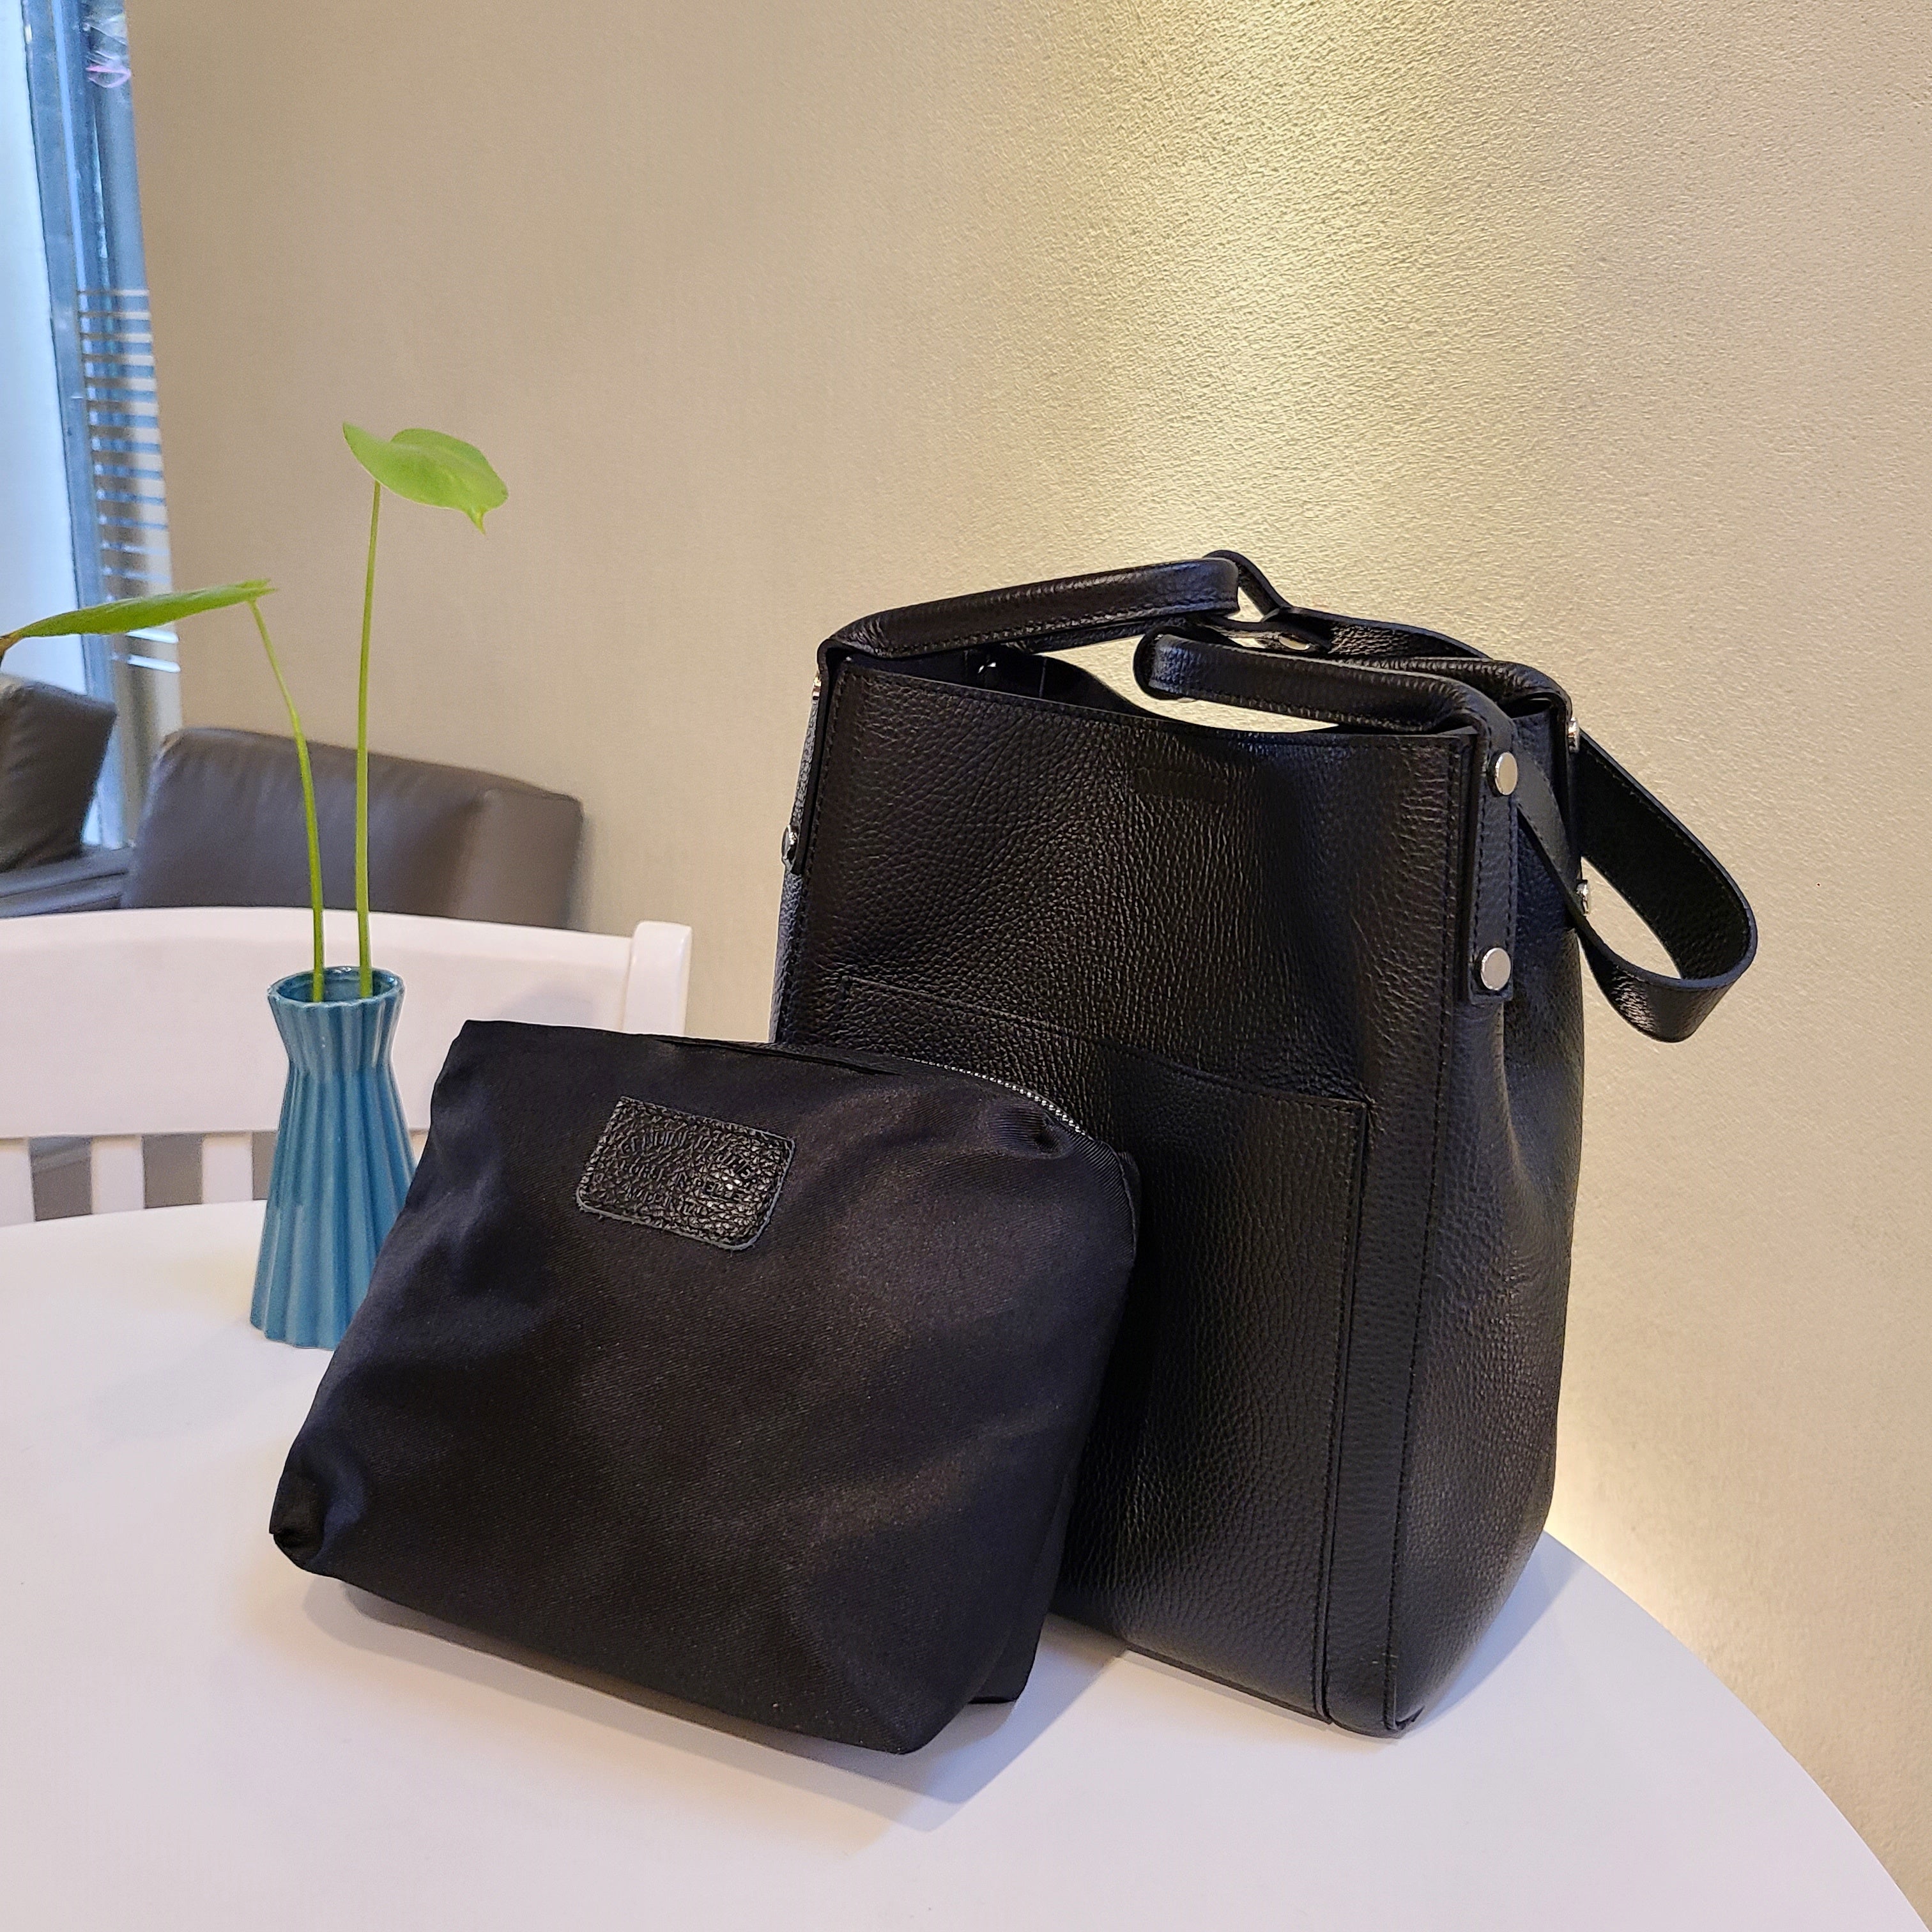 Vicenzo Leather Morimi Croc-Embossed Leather Handbag Bucket/Backpack Blue